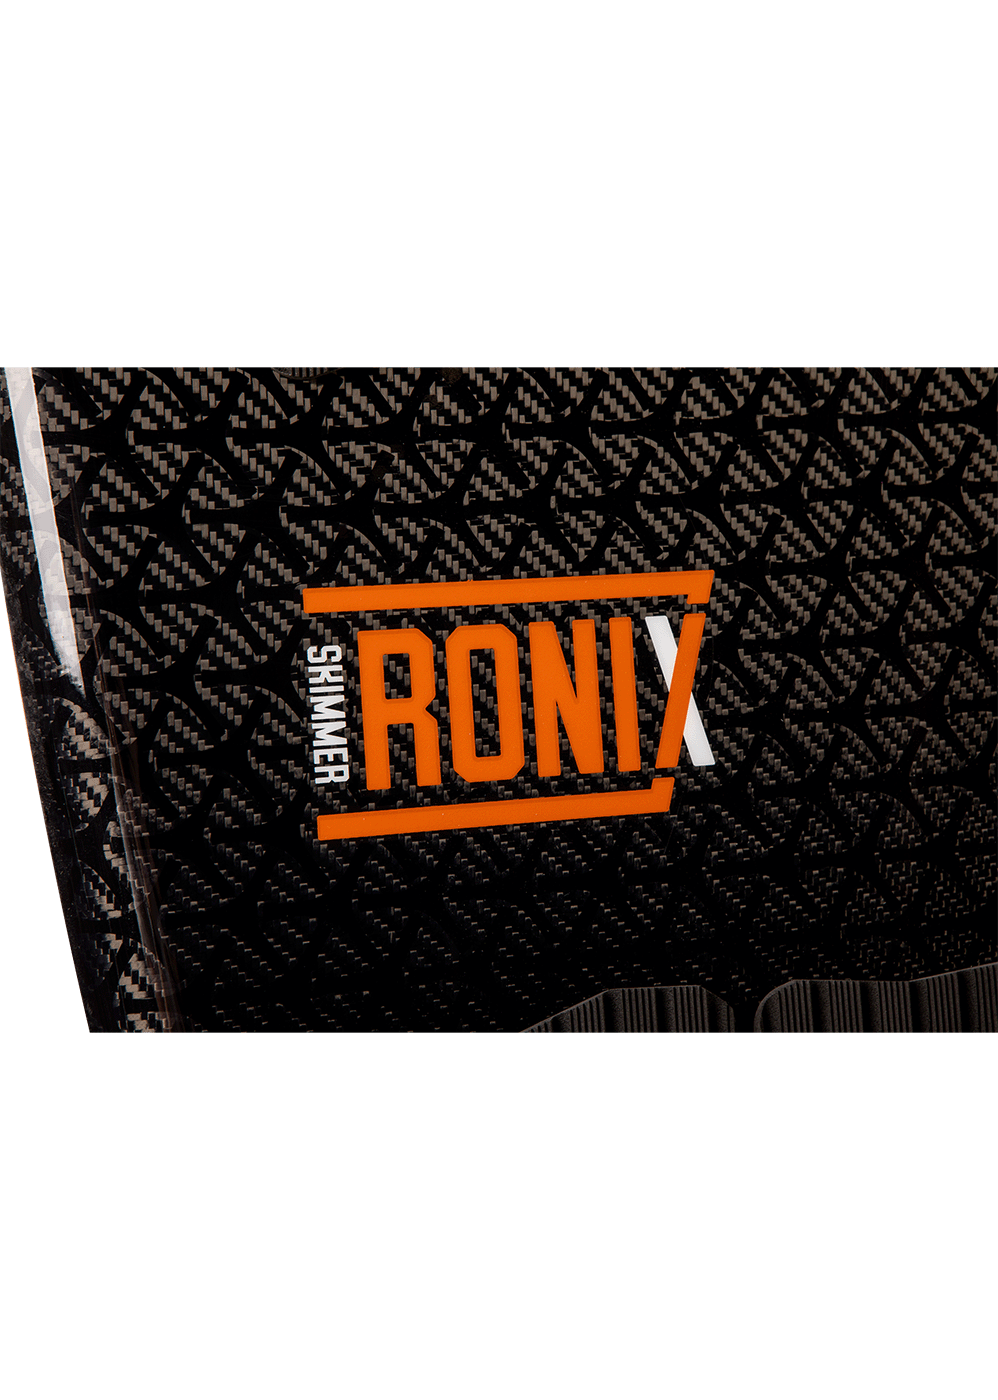 Ronix Air Core 3 Type 8:12 Wakesurf Board - 88 Gear